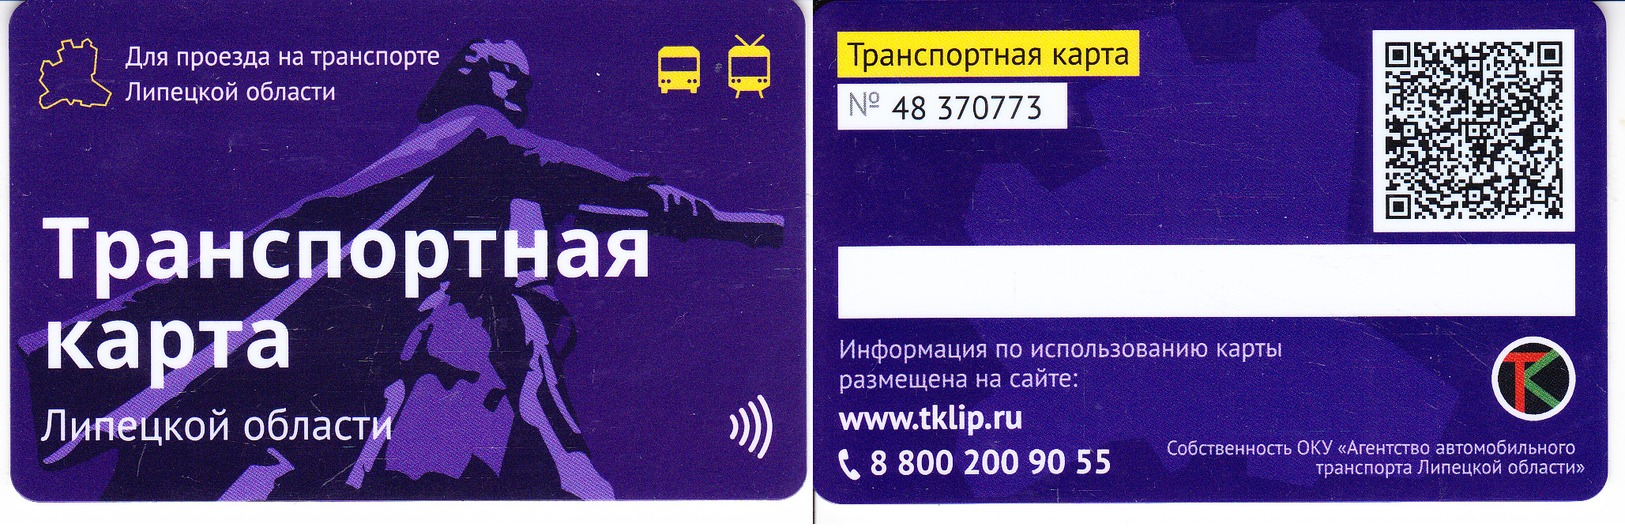 Transport  Card  Russia. Lipetsk Region  2019 - Russia